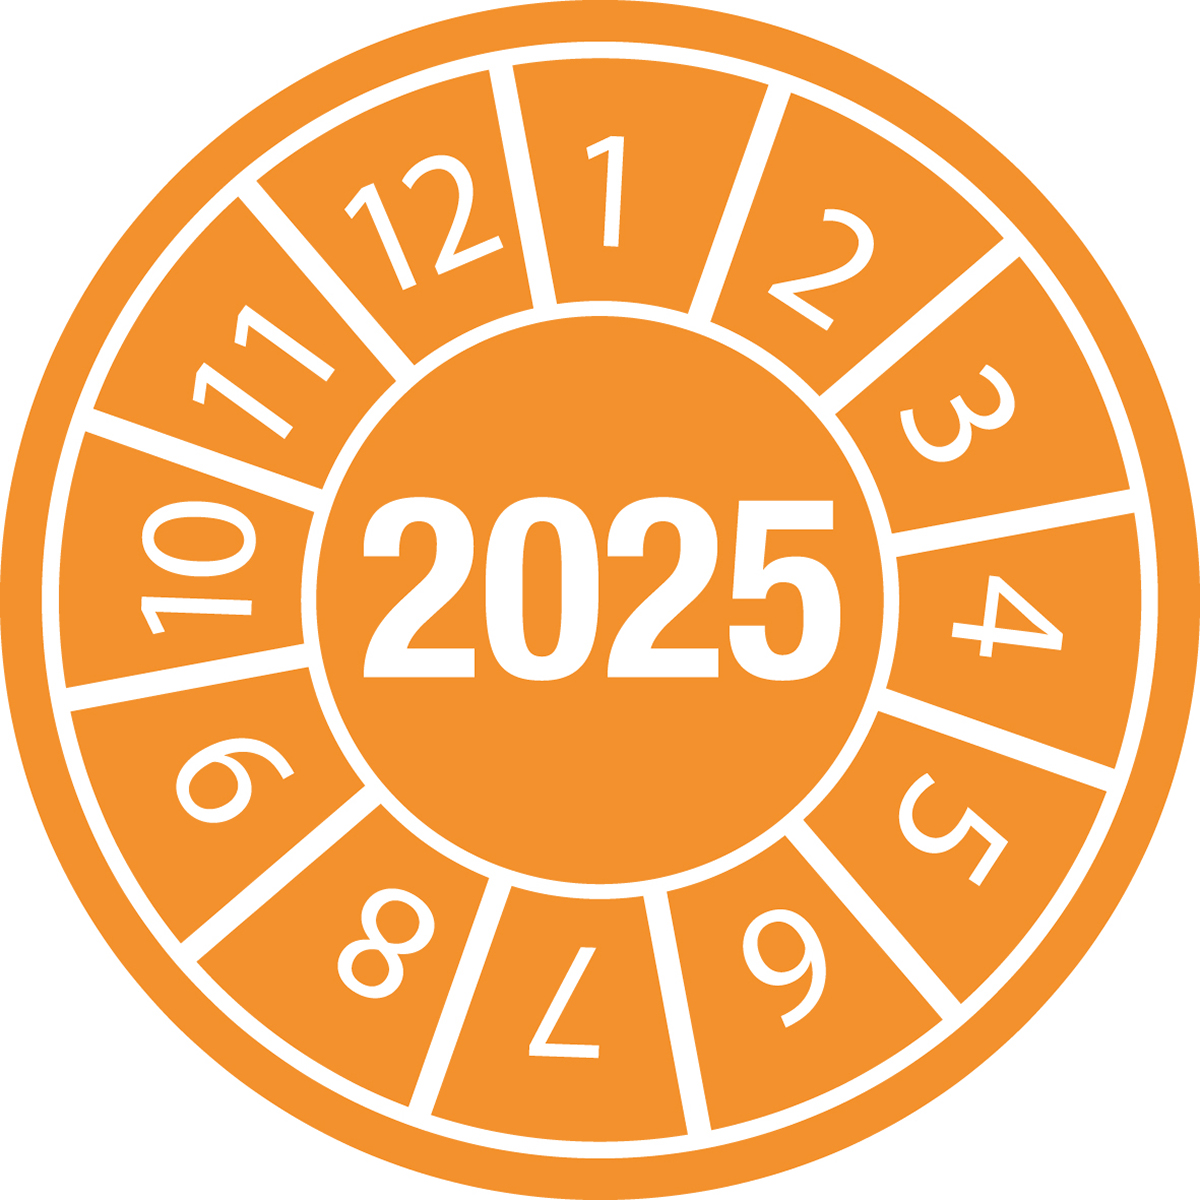 BRADY DATE 2025-DIA 10 B-429 DATE INSPECTION LBLS B-429 2025 - DIA 10 834151